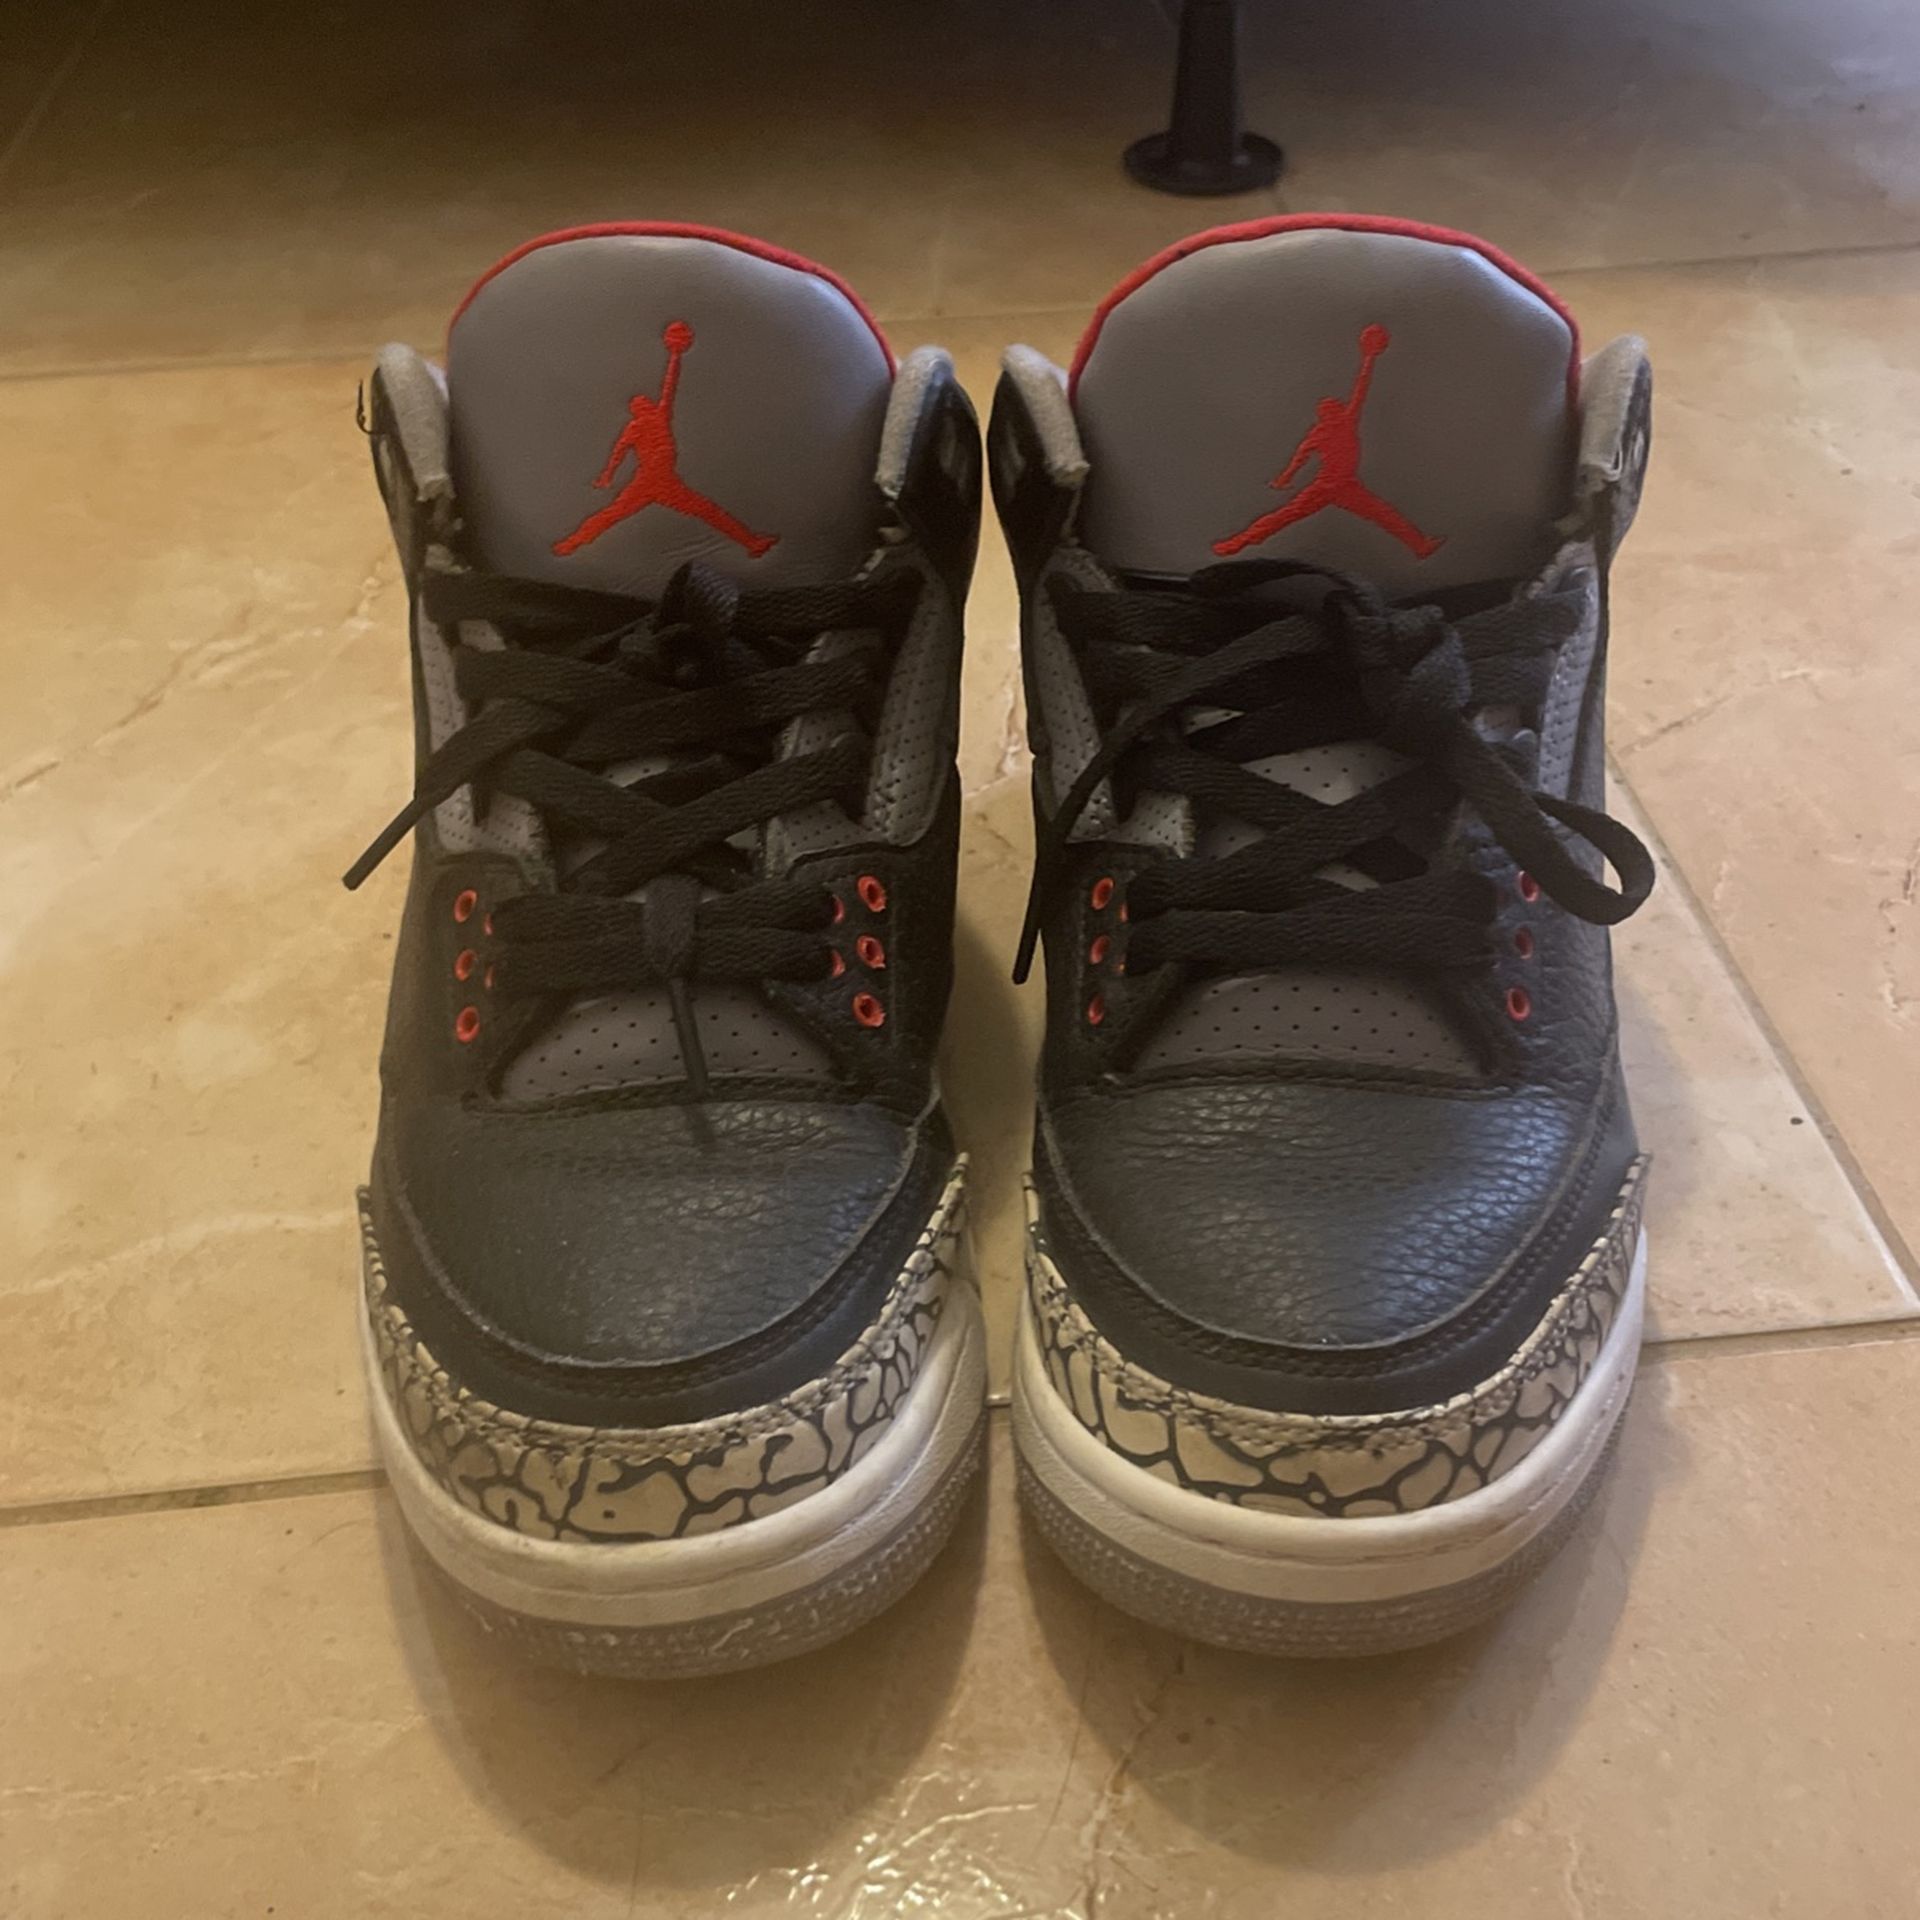 Air Jordan 3 Black Cement Size 8.5